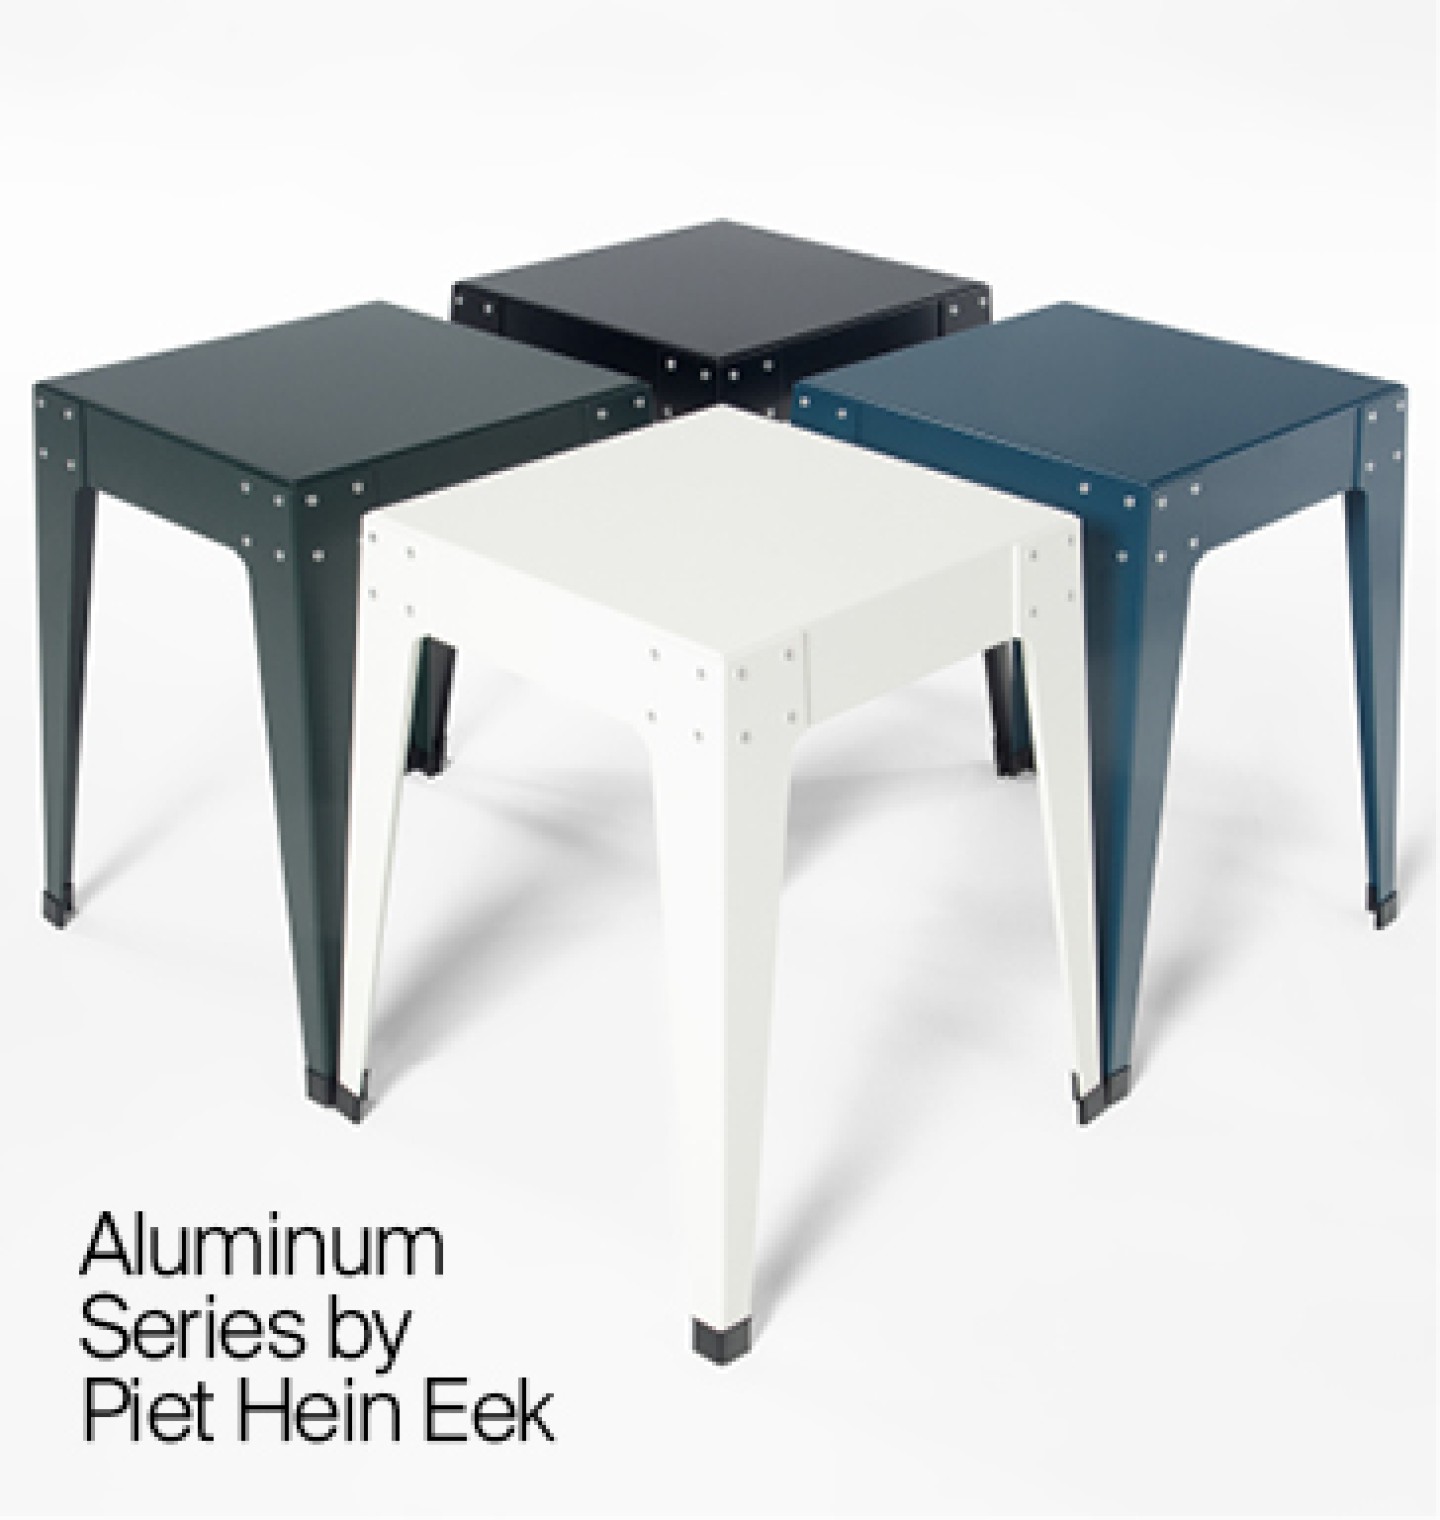 Piet Hein Eek Aluminum Series exist of a stool, chair and desk